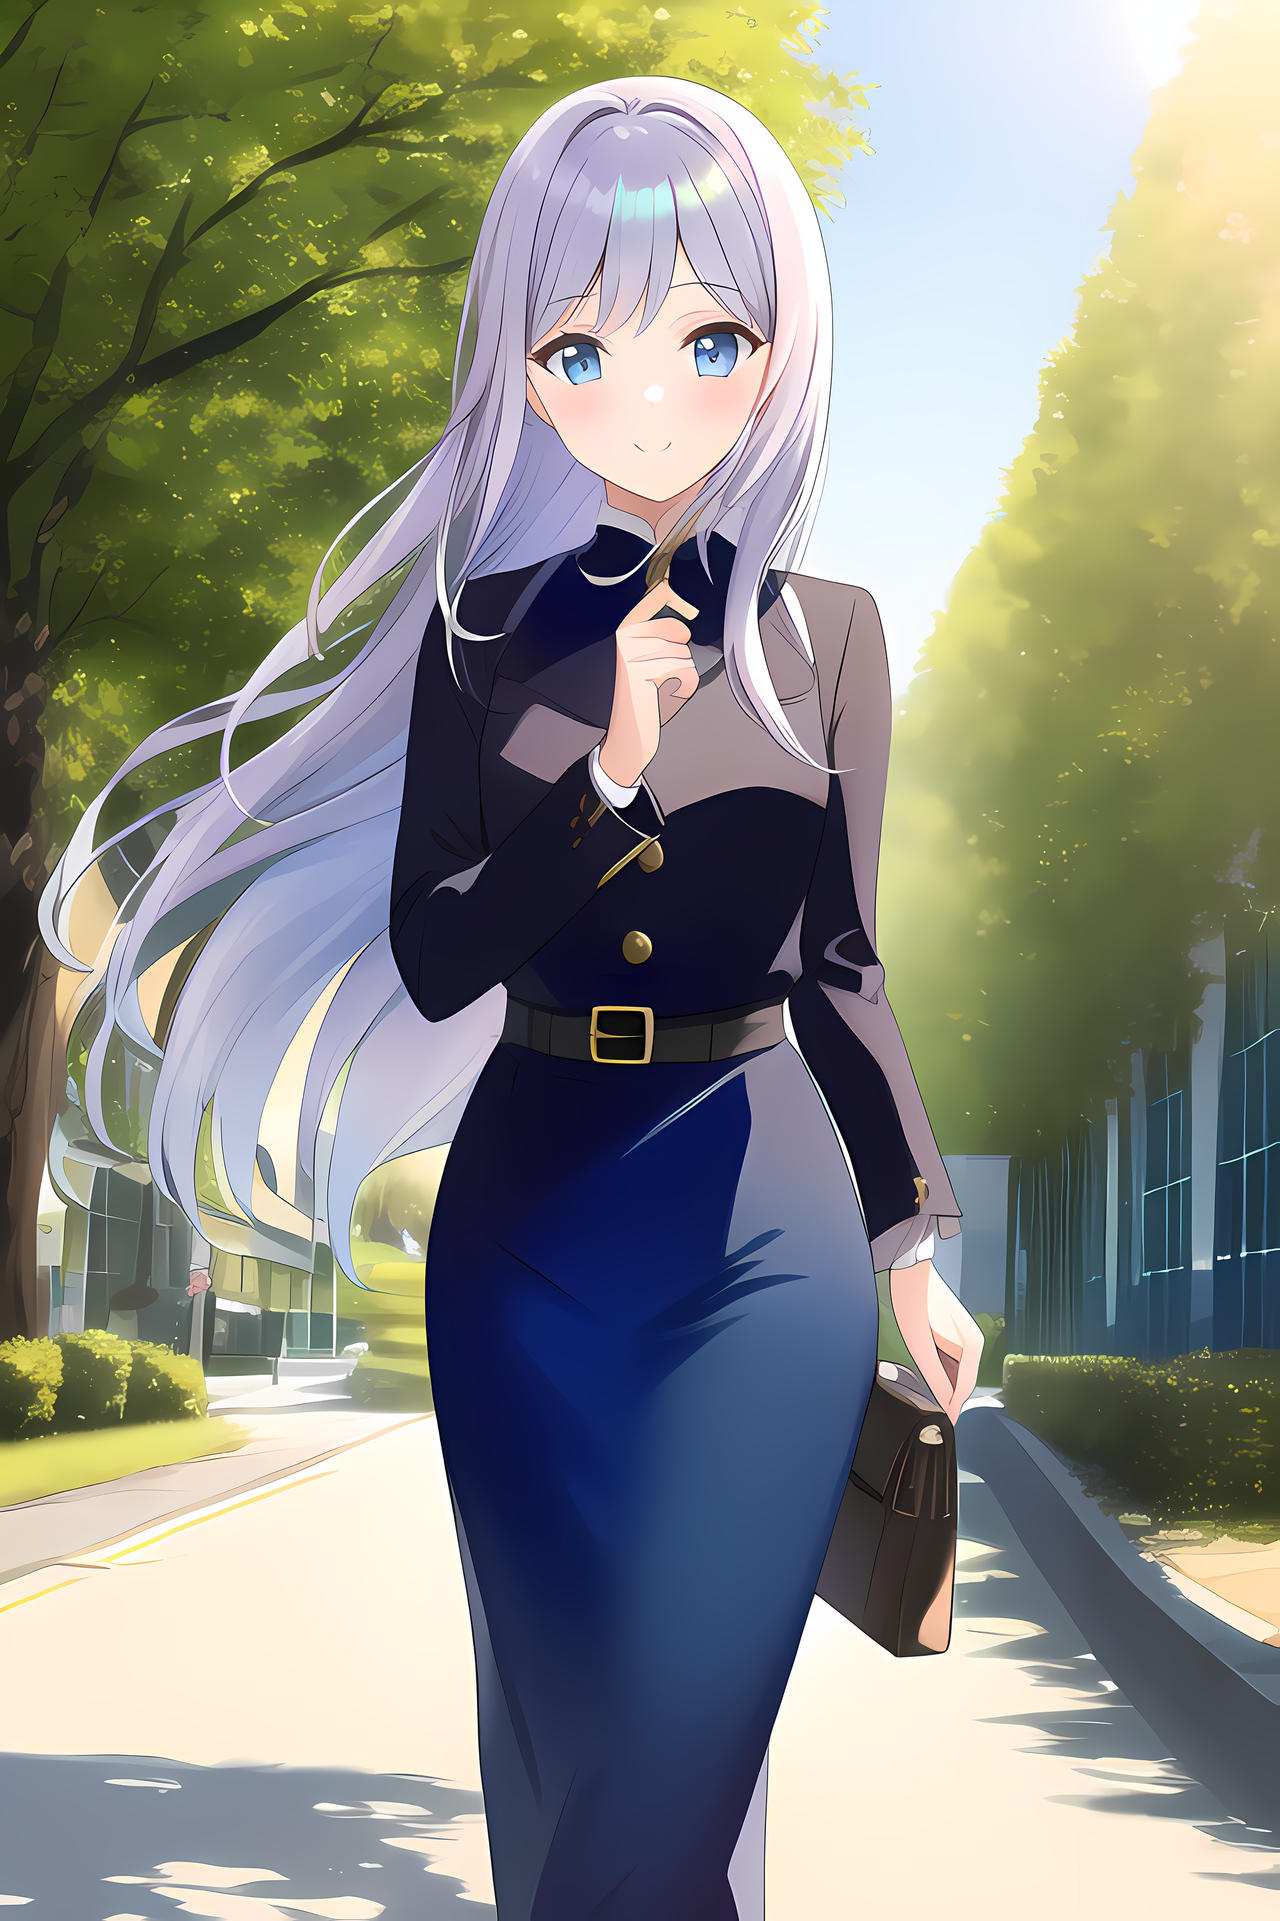 NovelAI Anime Girl by DarkPrncsAI on DeviantArt novelai artist tags